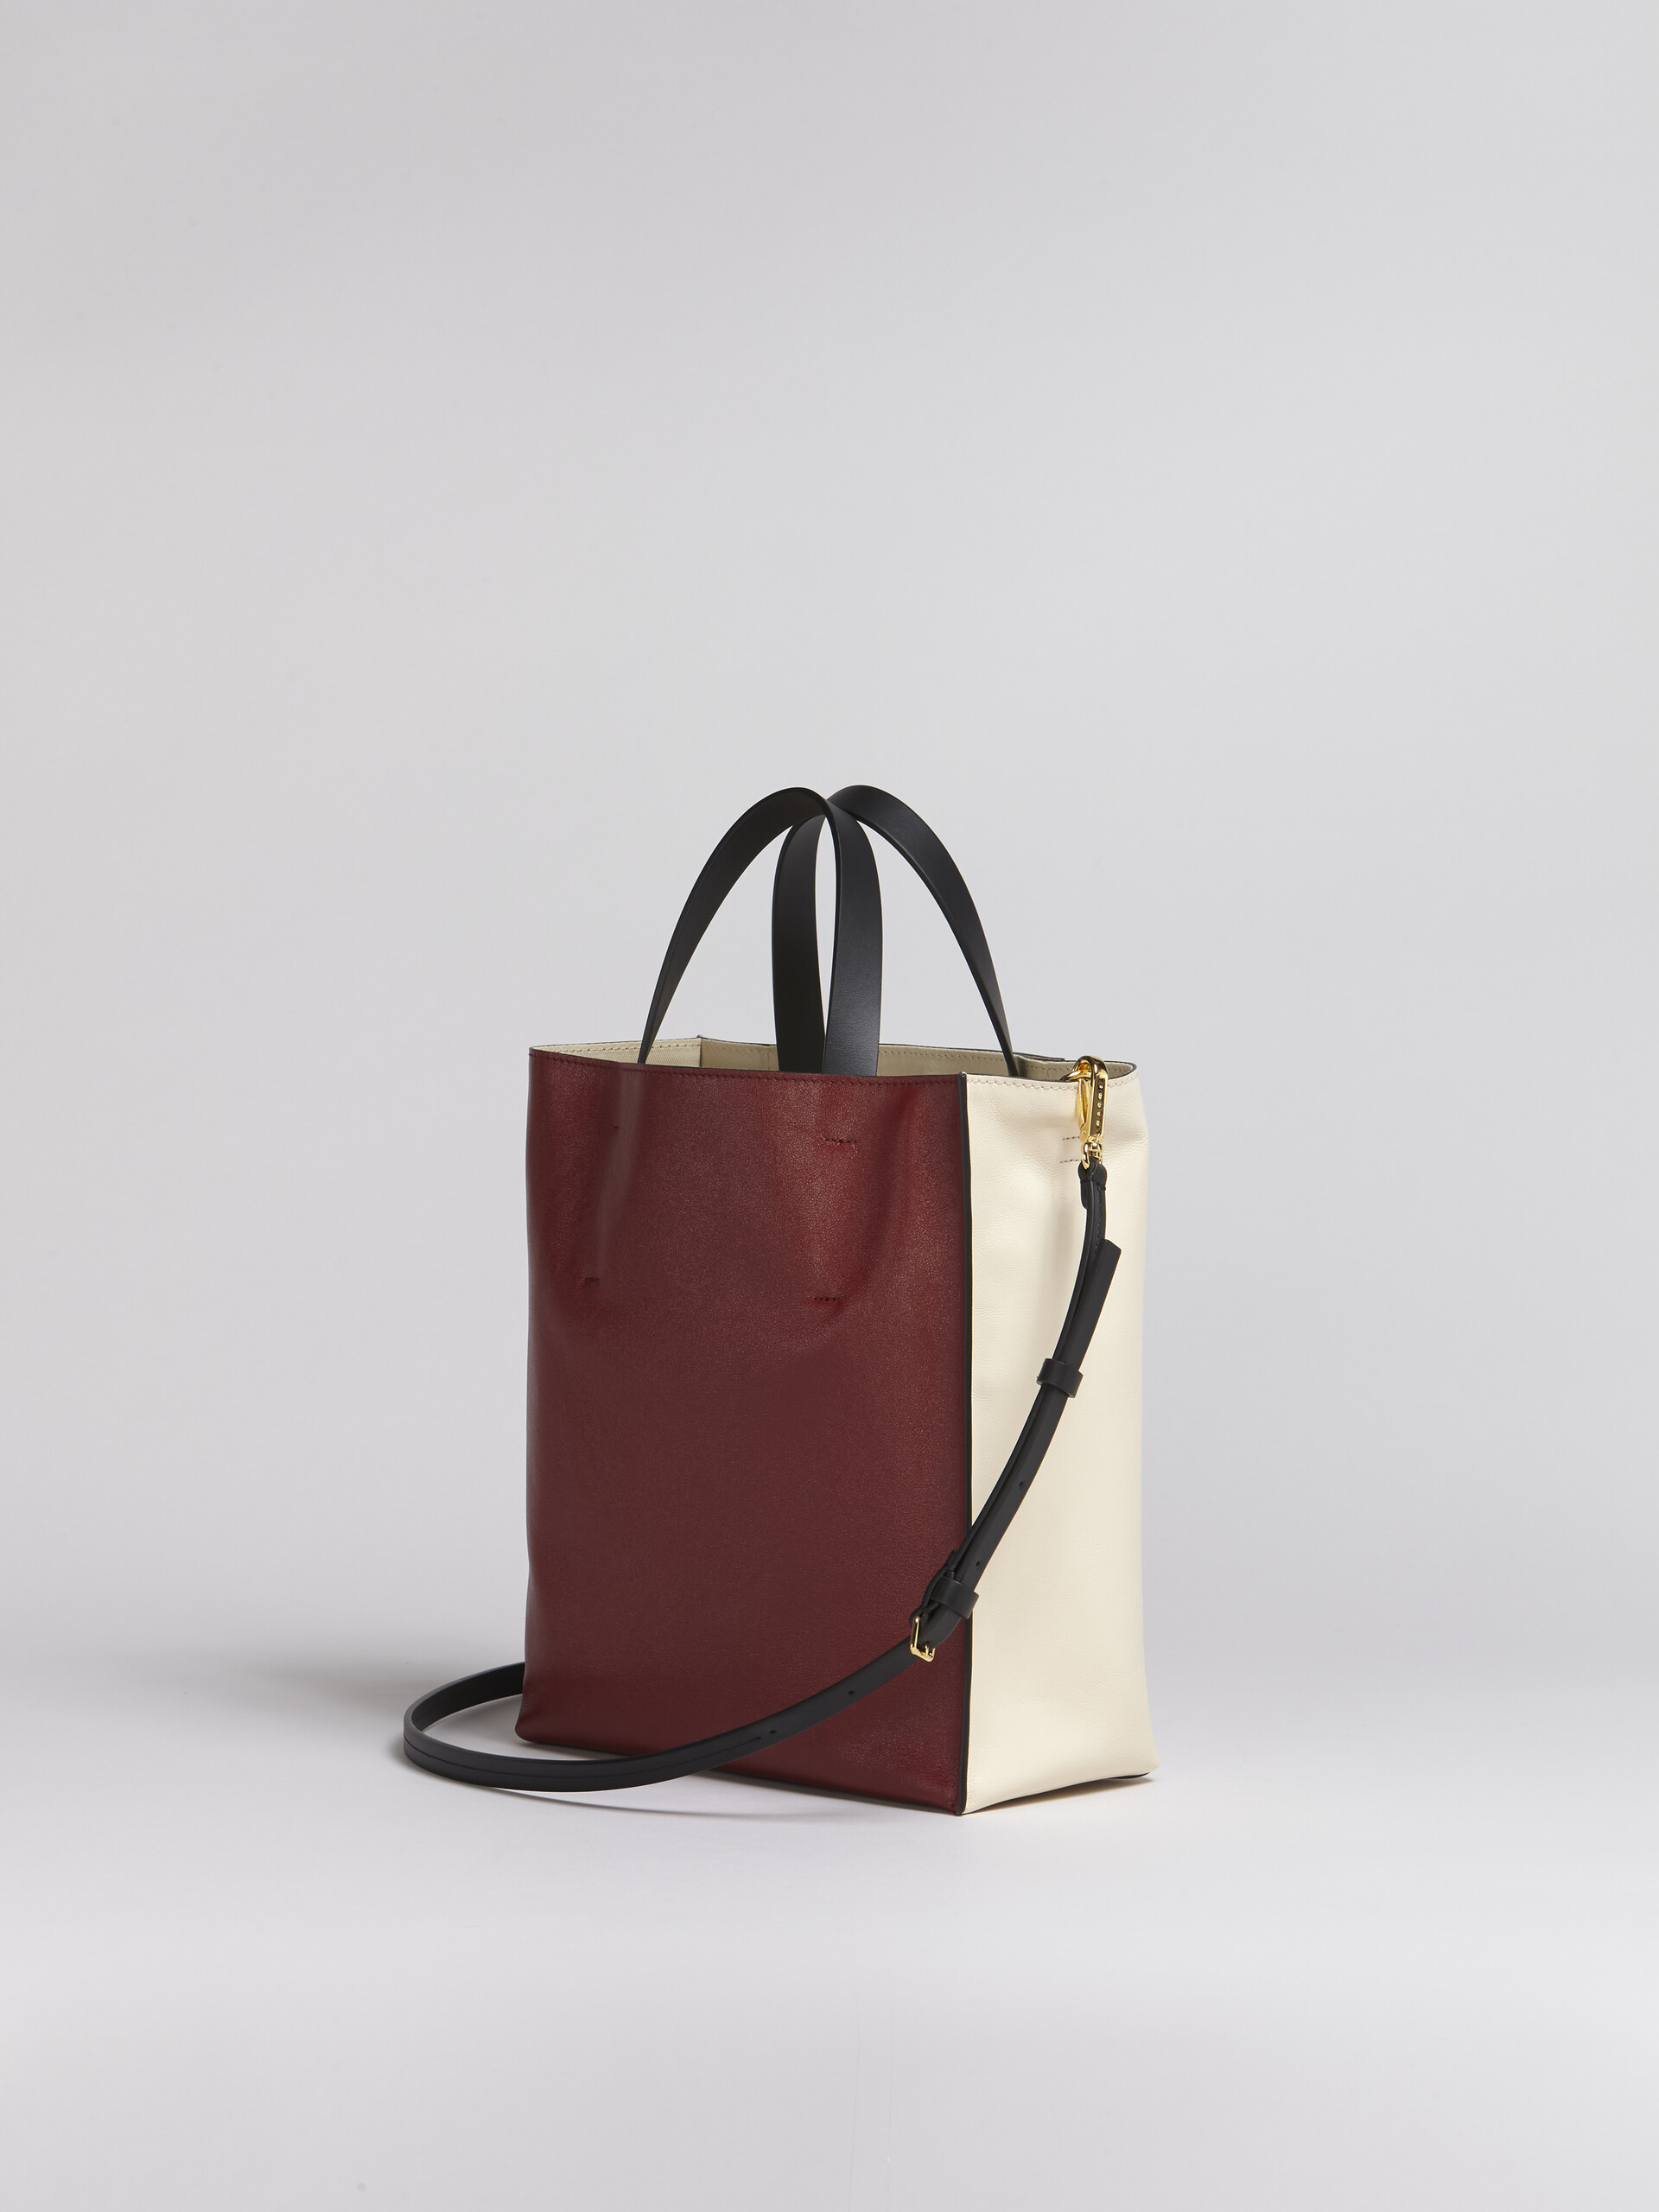 MUSEO SOFT bag piccola in pelle bianca e rosso - Borse shopping - Image 2